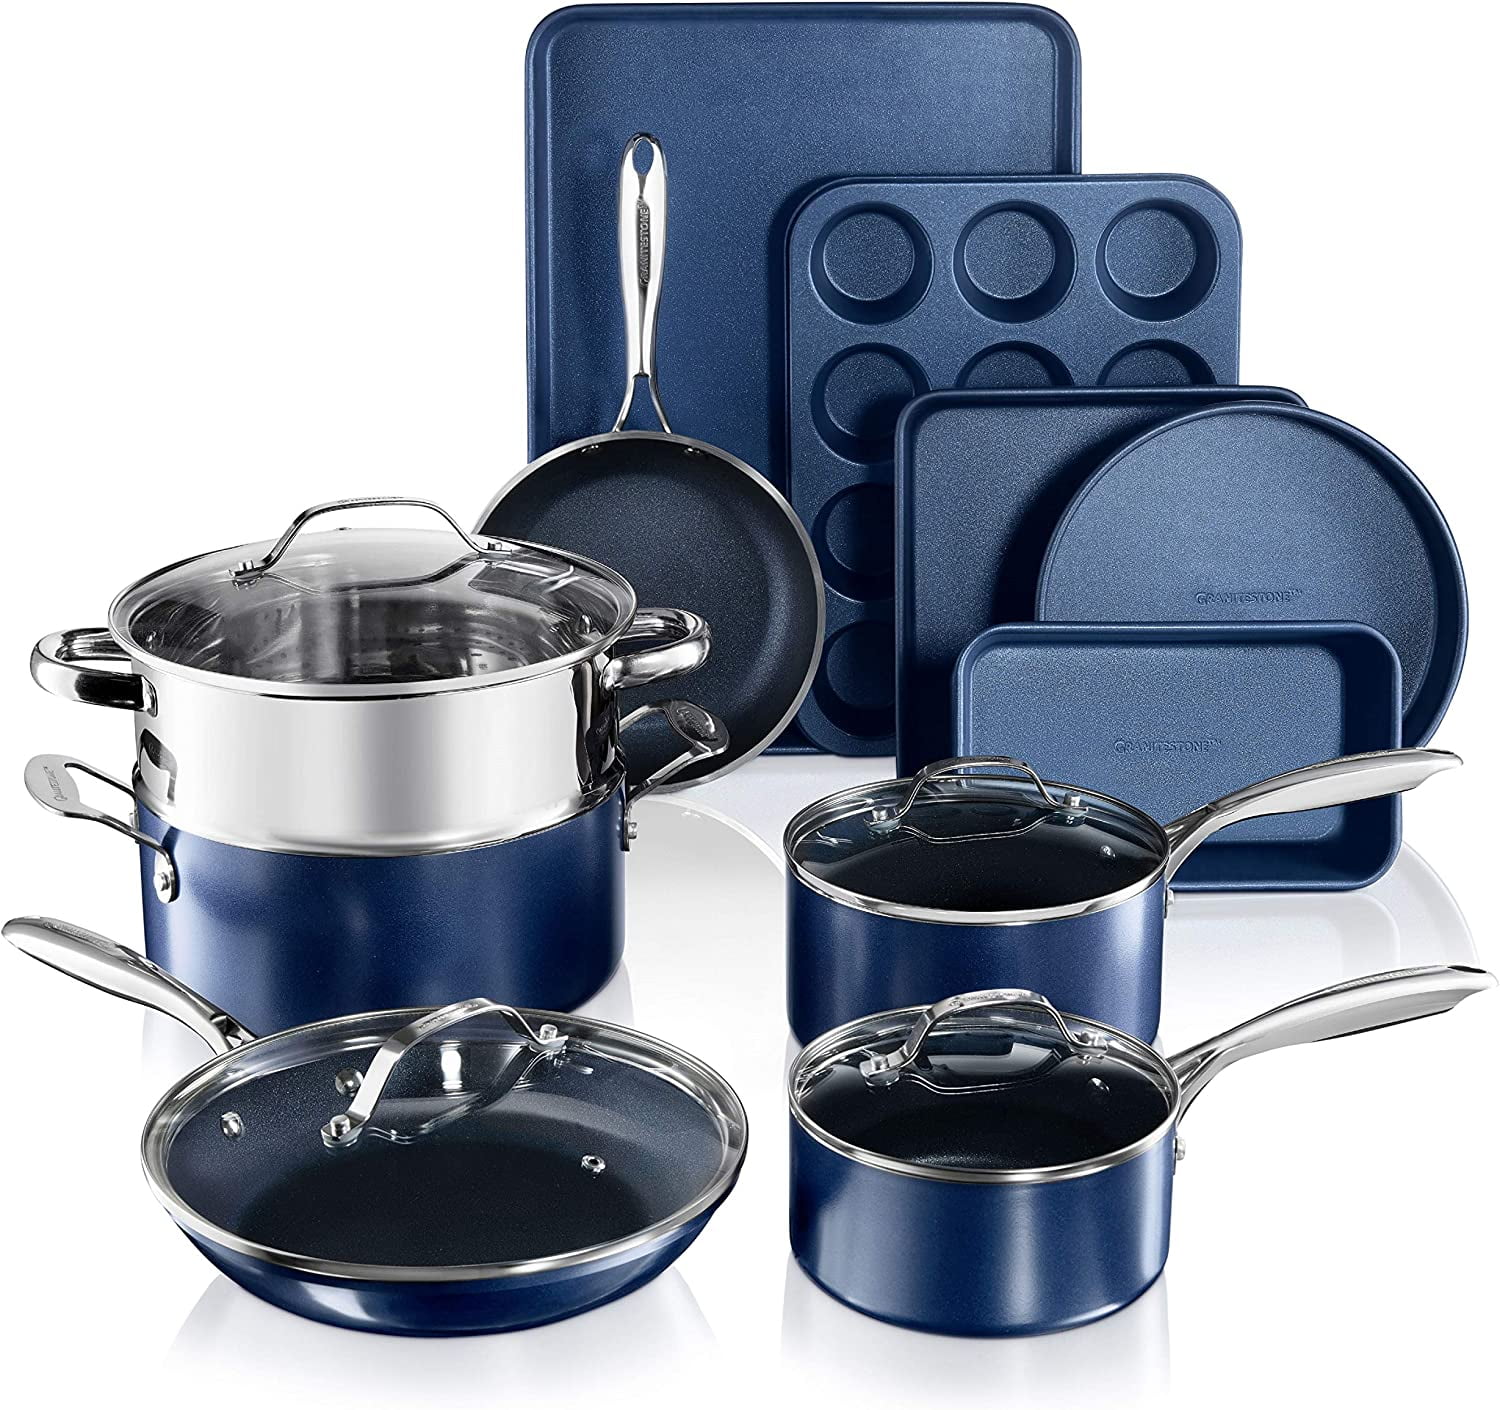 Granite Hammered Pan Set 15 Piece Induction Kitchen Cookware Sets Nonstick Dishwasher Safe Cooking Pots and Pans Set